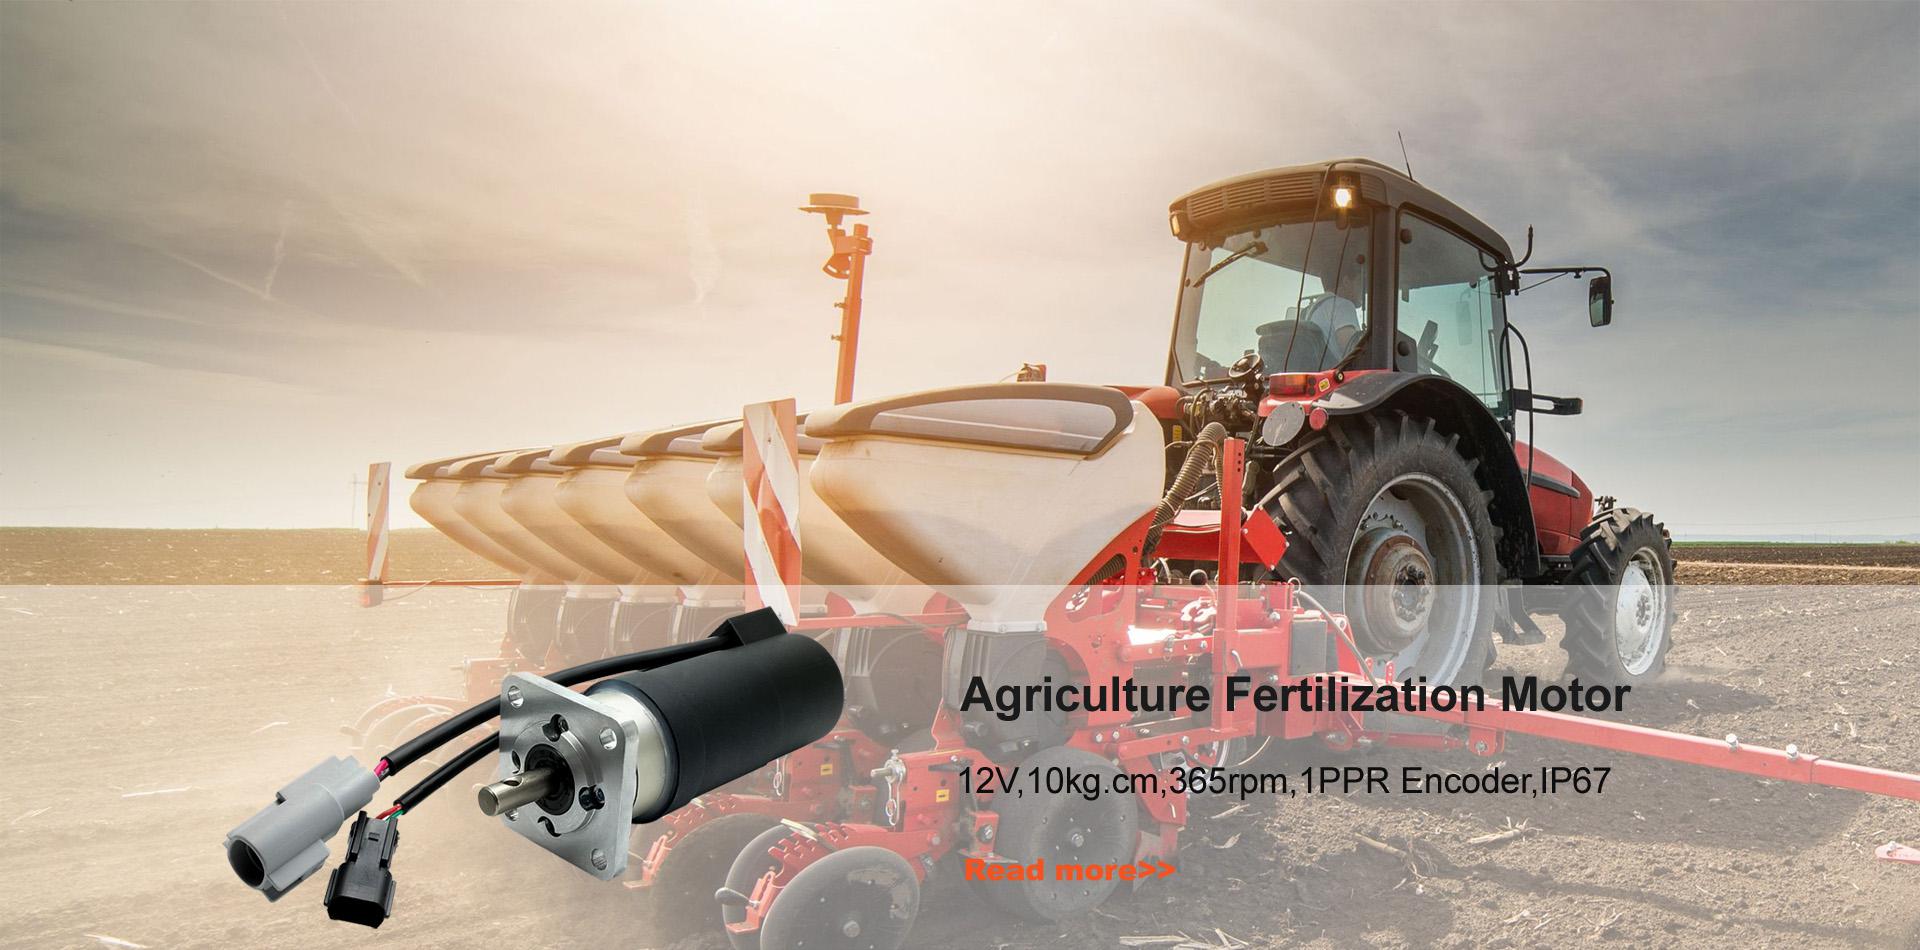 Agriculture Fertilization Motor